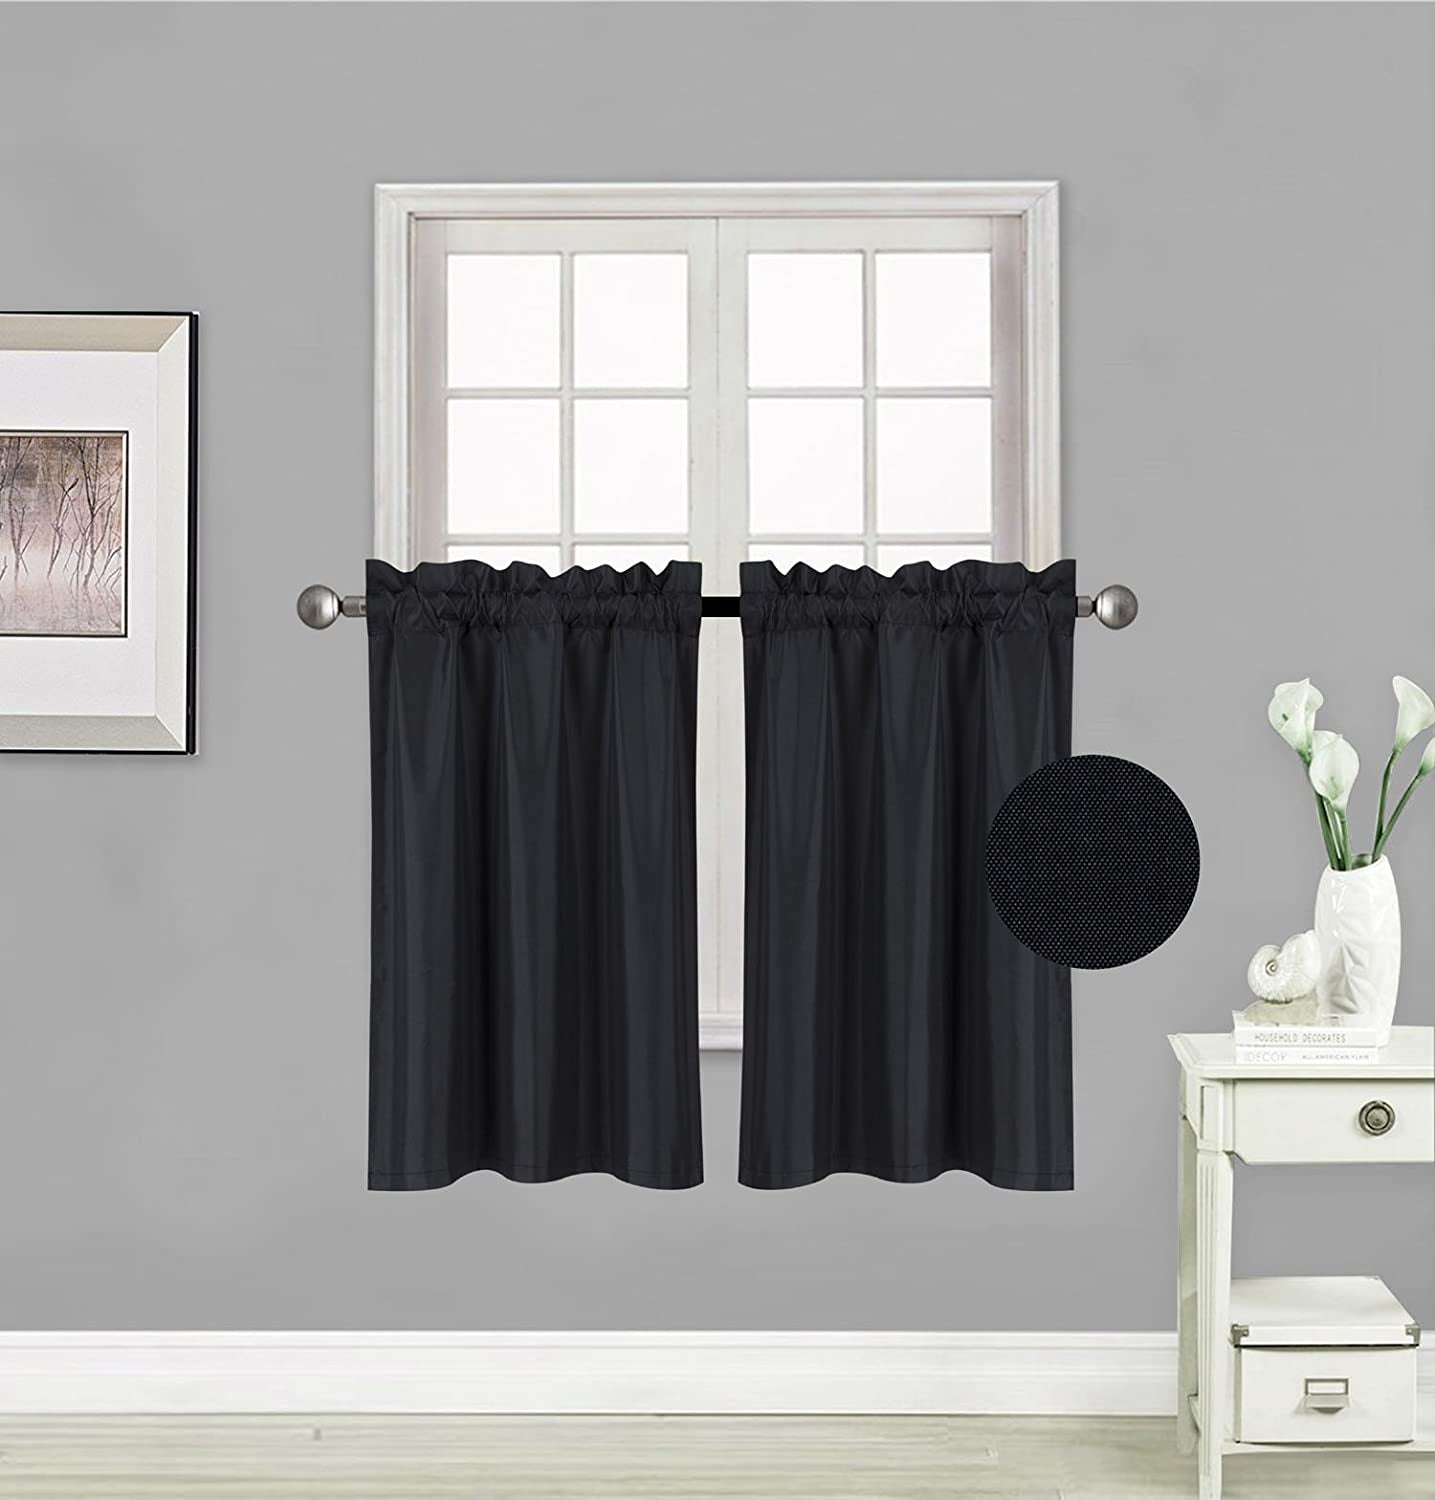 Elegant Home 2 Short Panels Tiers Small Window Treatment Curtain Blackout 28" W X 36" L Each for Kitchen Bathroom # R5  Elegant Home Decor Black  